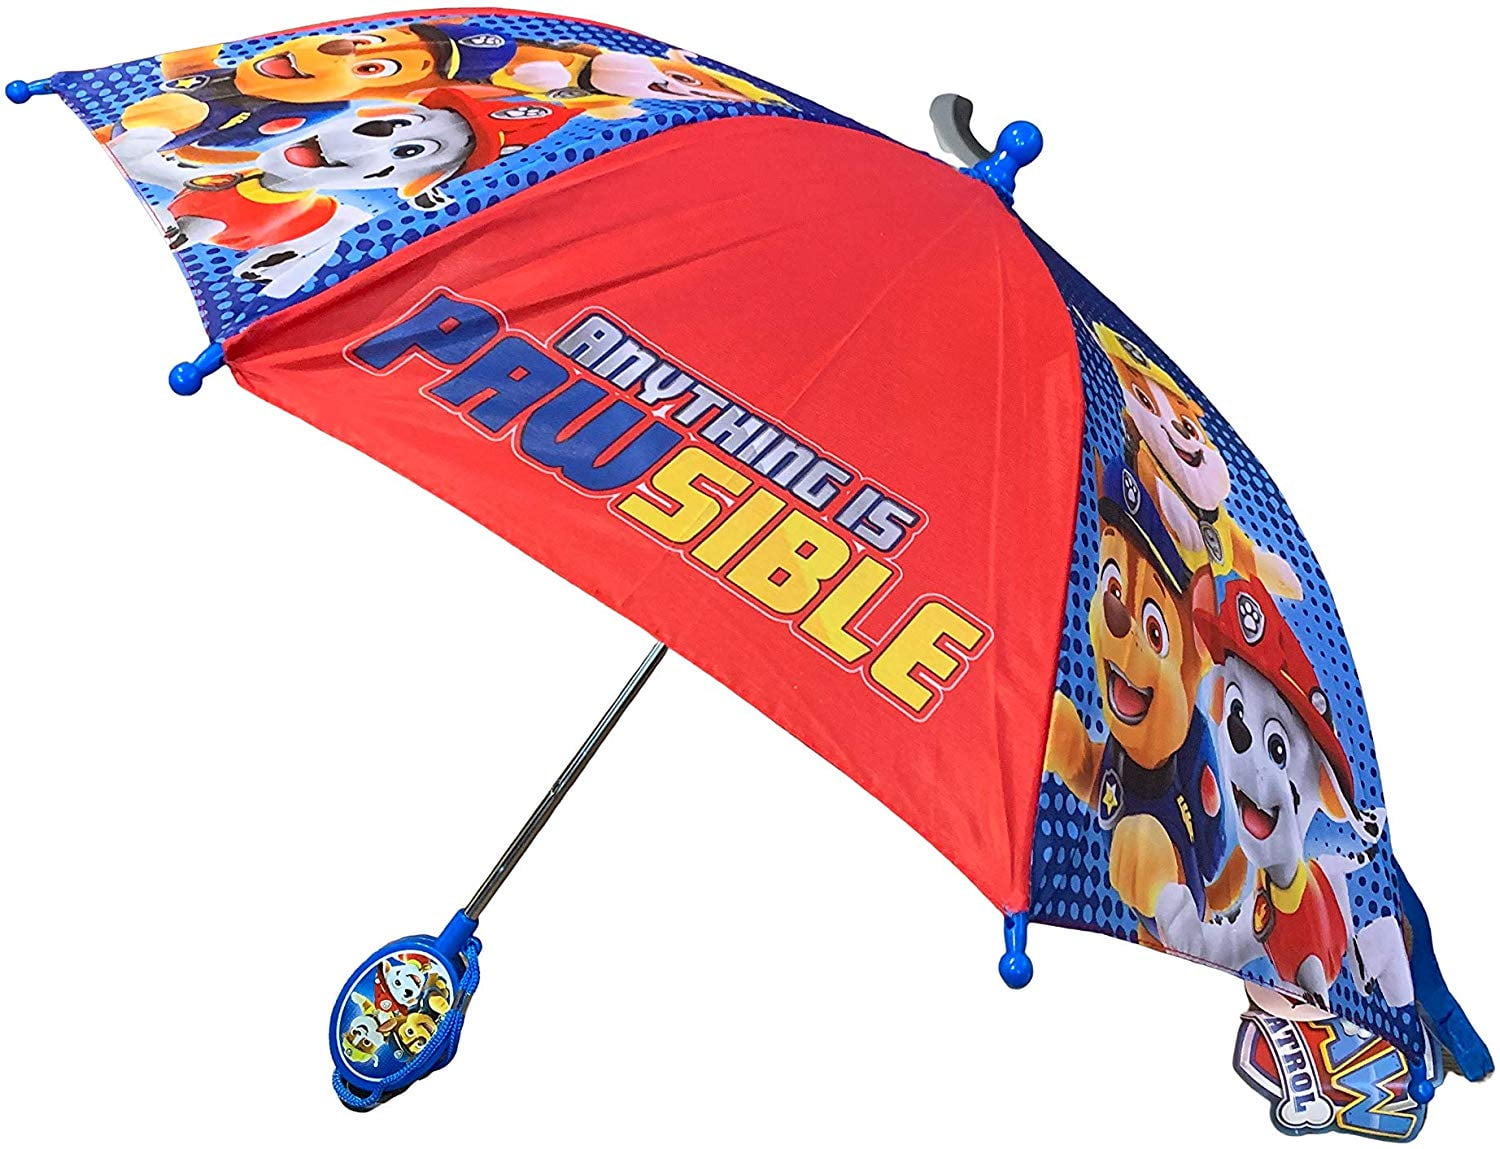 ABG Accessories Disney Frozen 2 3D Handle Umbrella for Kids Age 3-7 